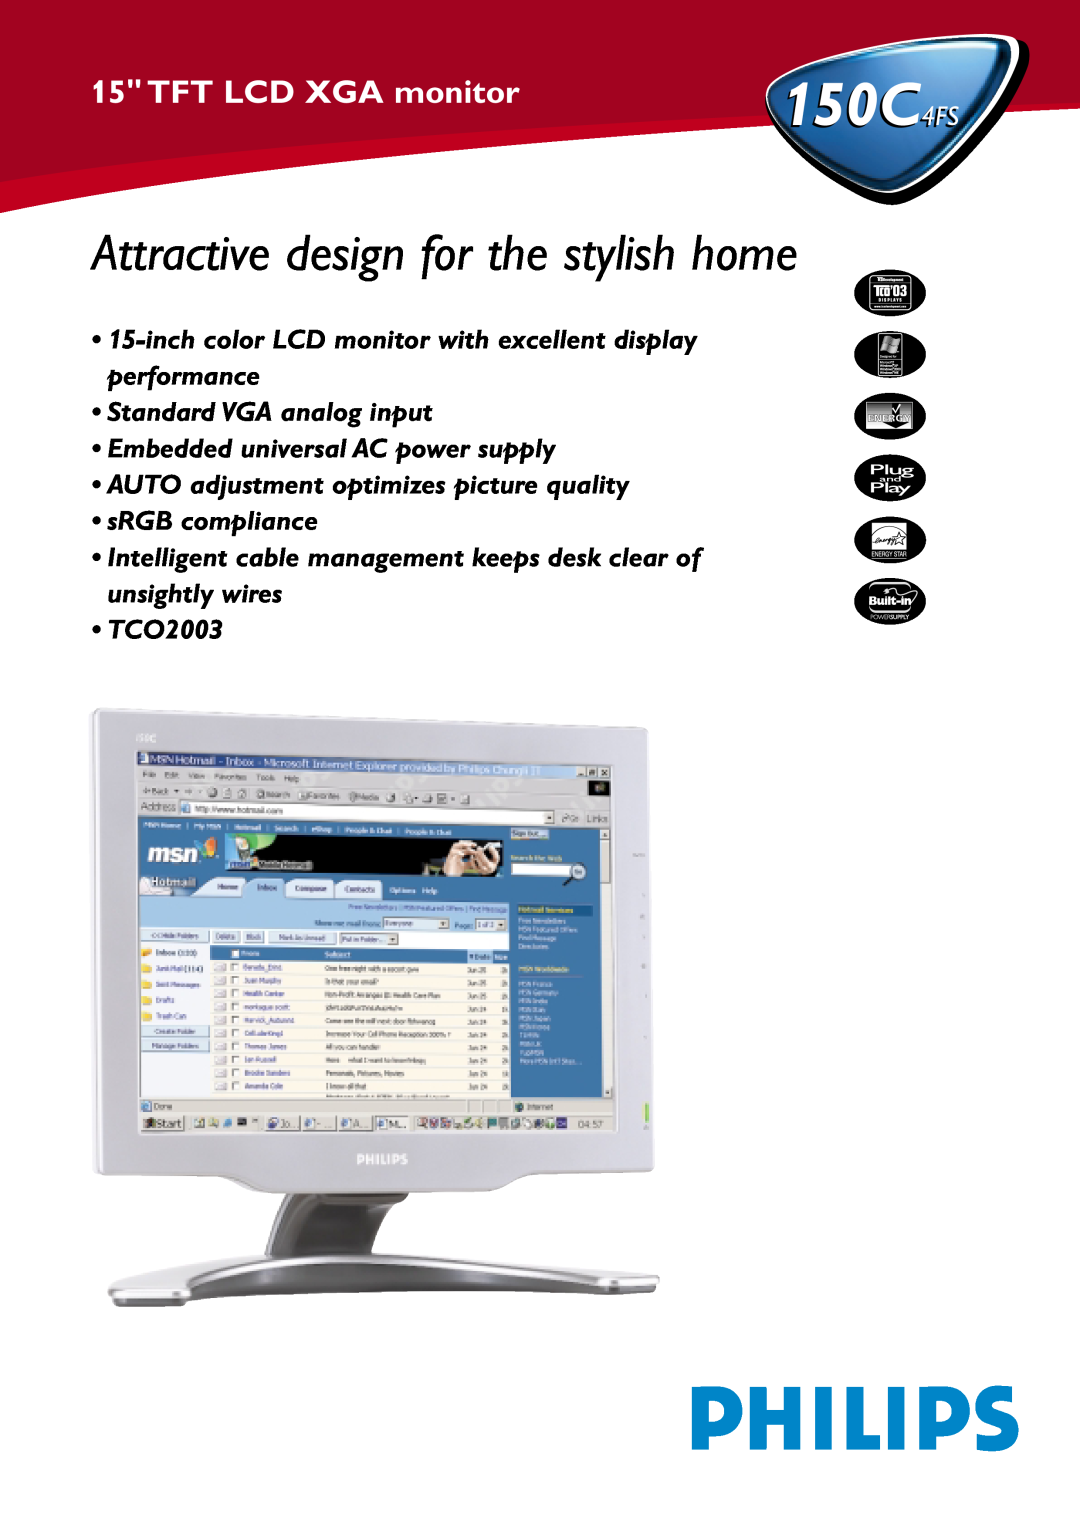 Philips manual 150C4FS, Attractive design for the stylish home, TFT LCD XGA monitor, Standard VGA analog input 